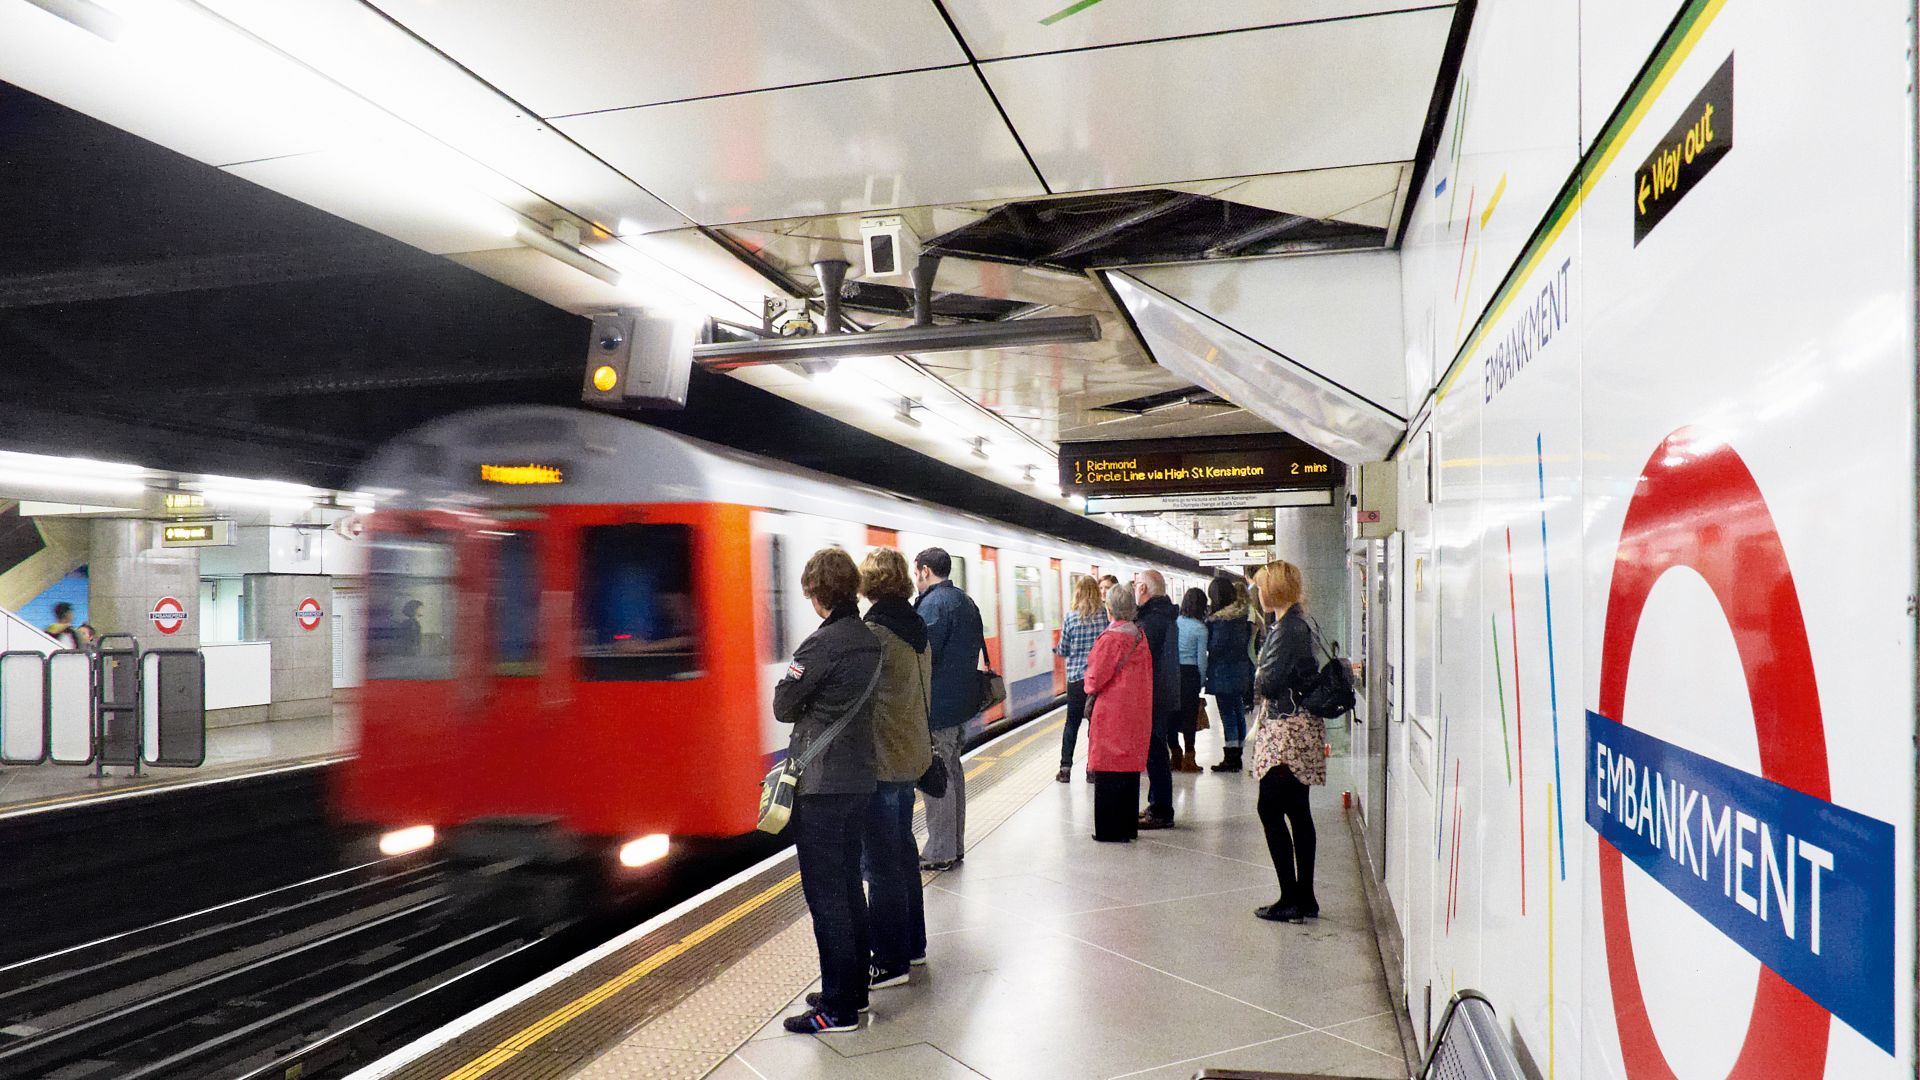 People waiting at London underground station